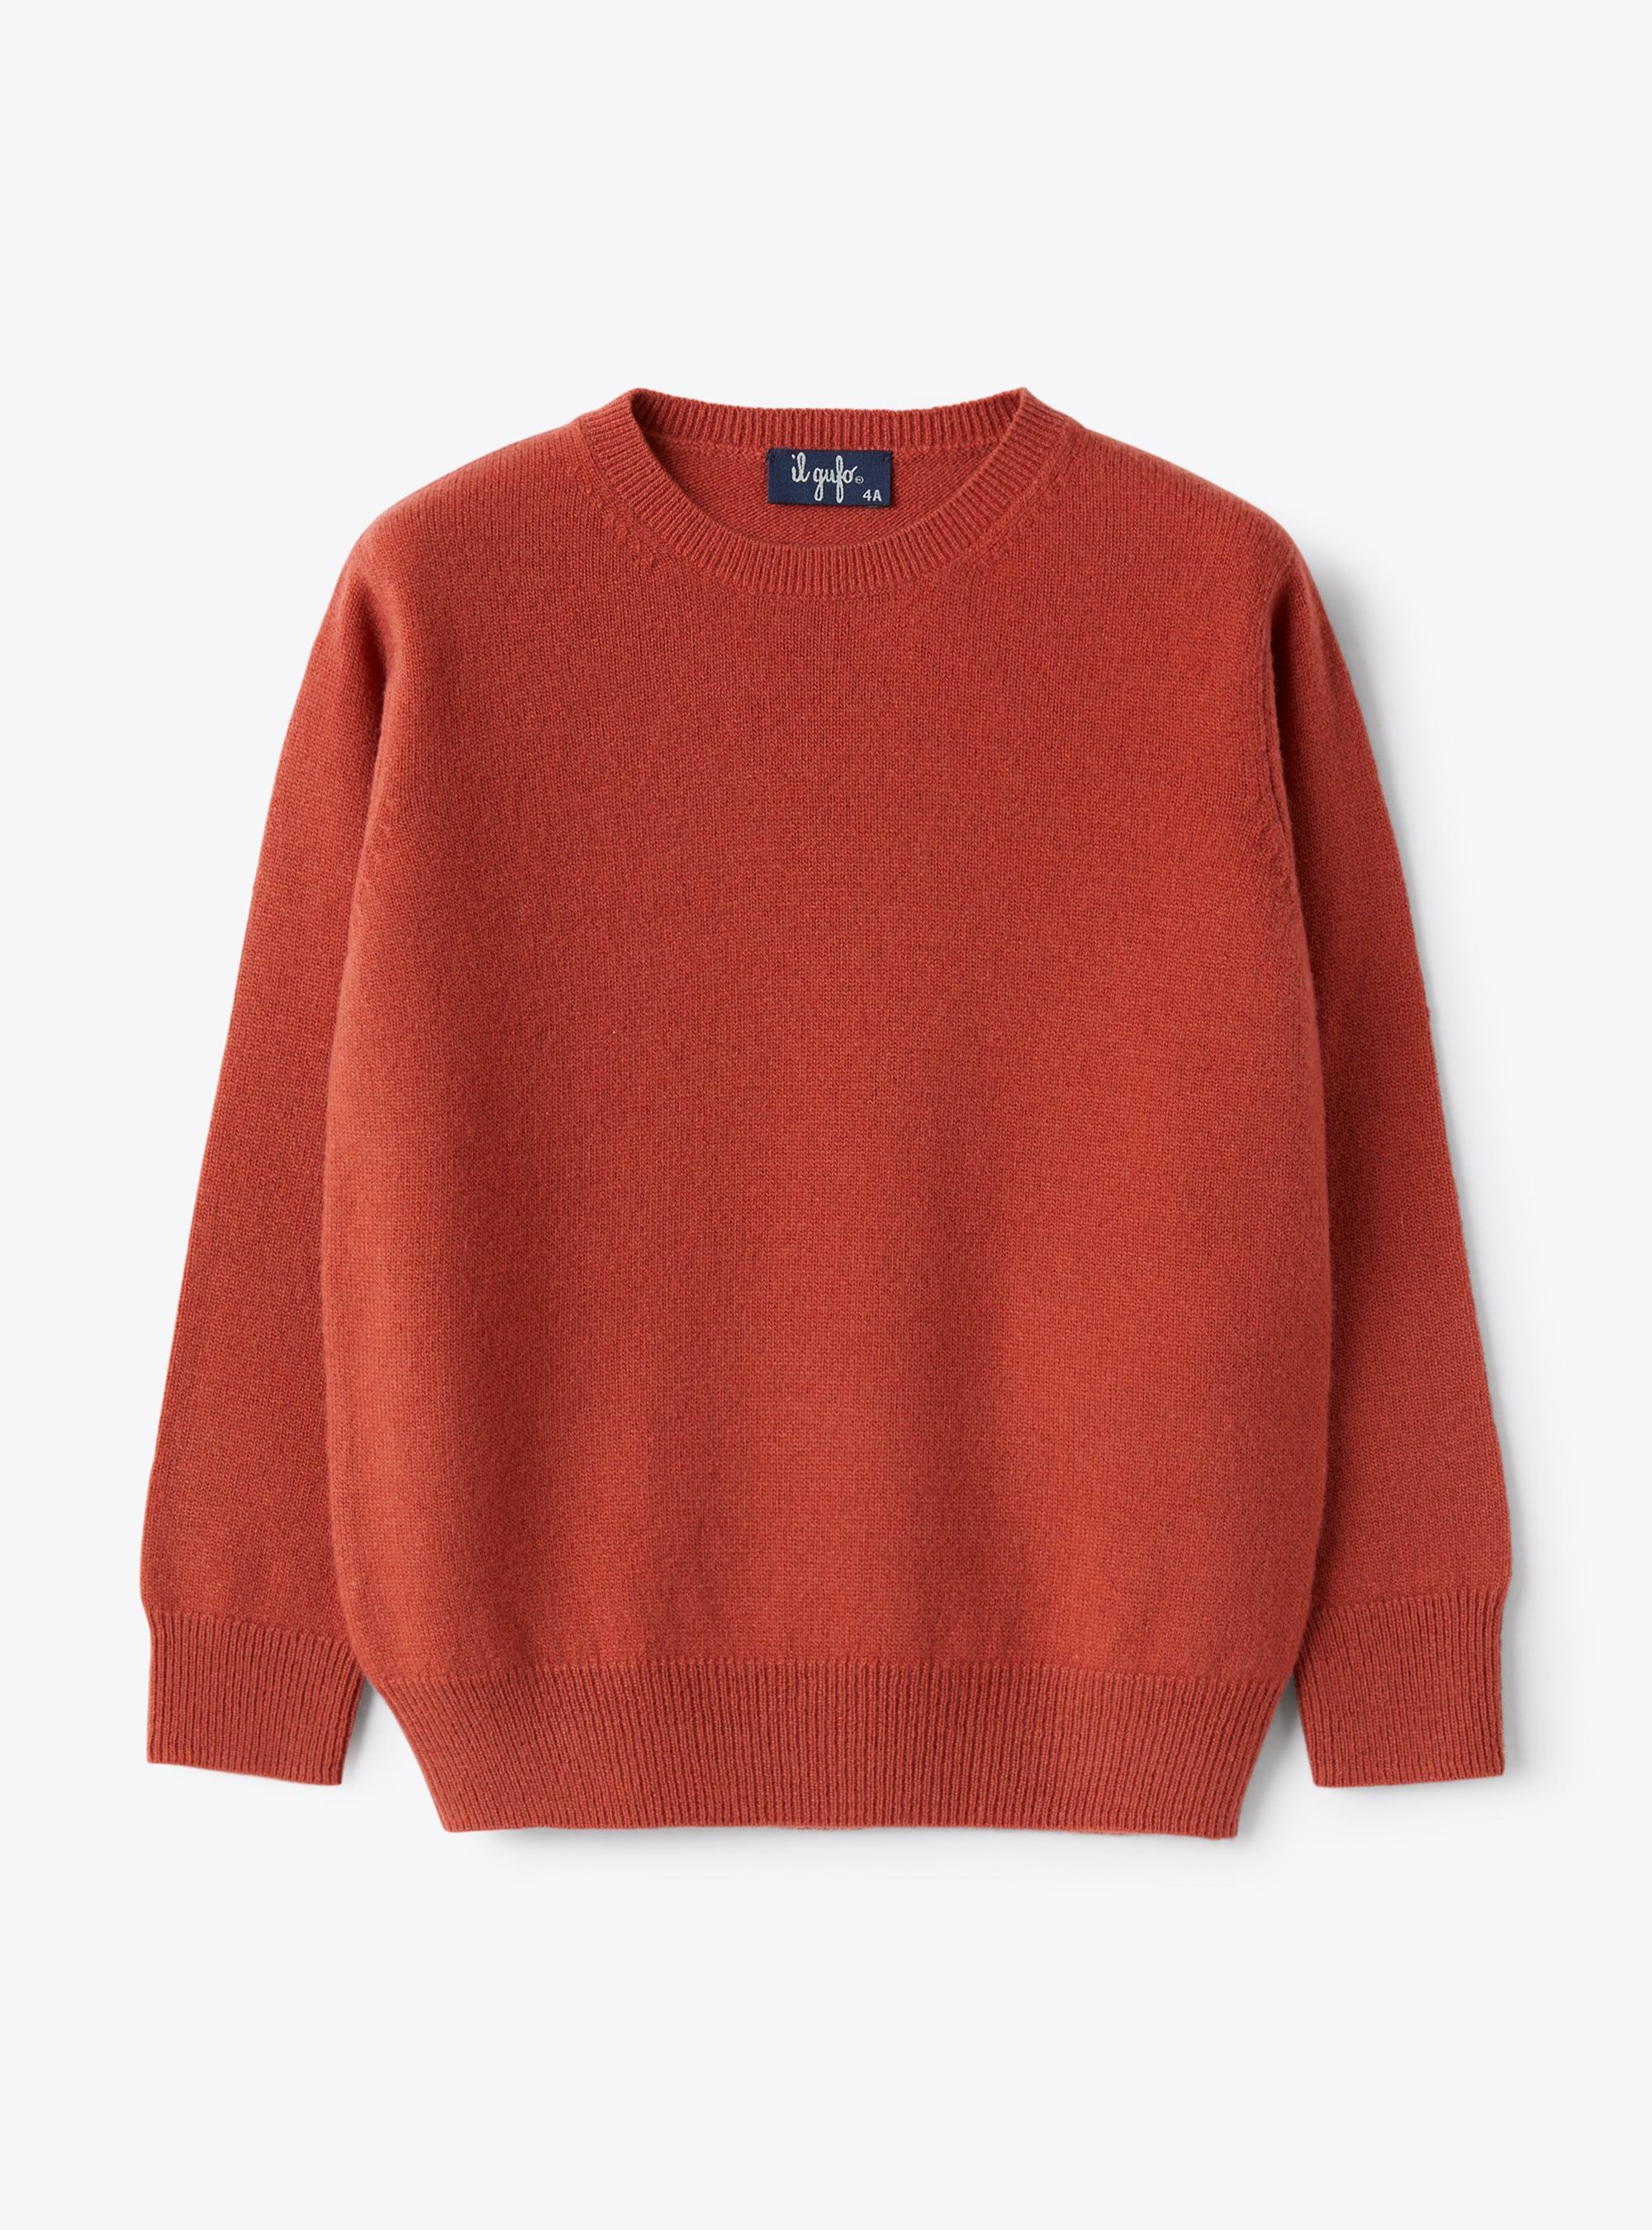 Orange crew neck wool sweater - Sweaters - Il Gufo